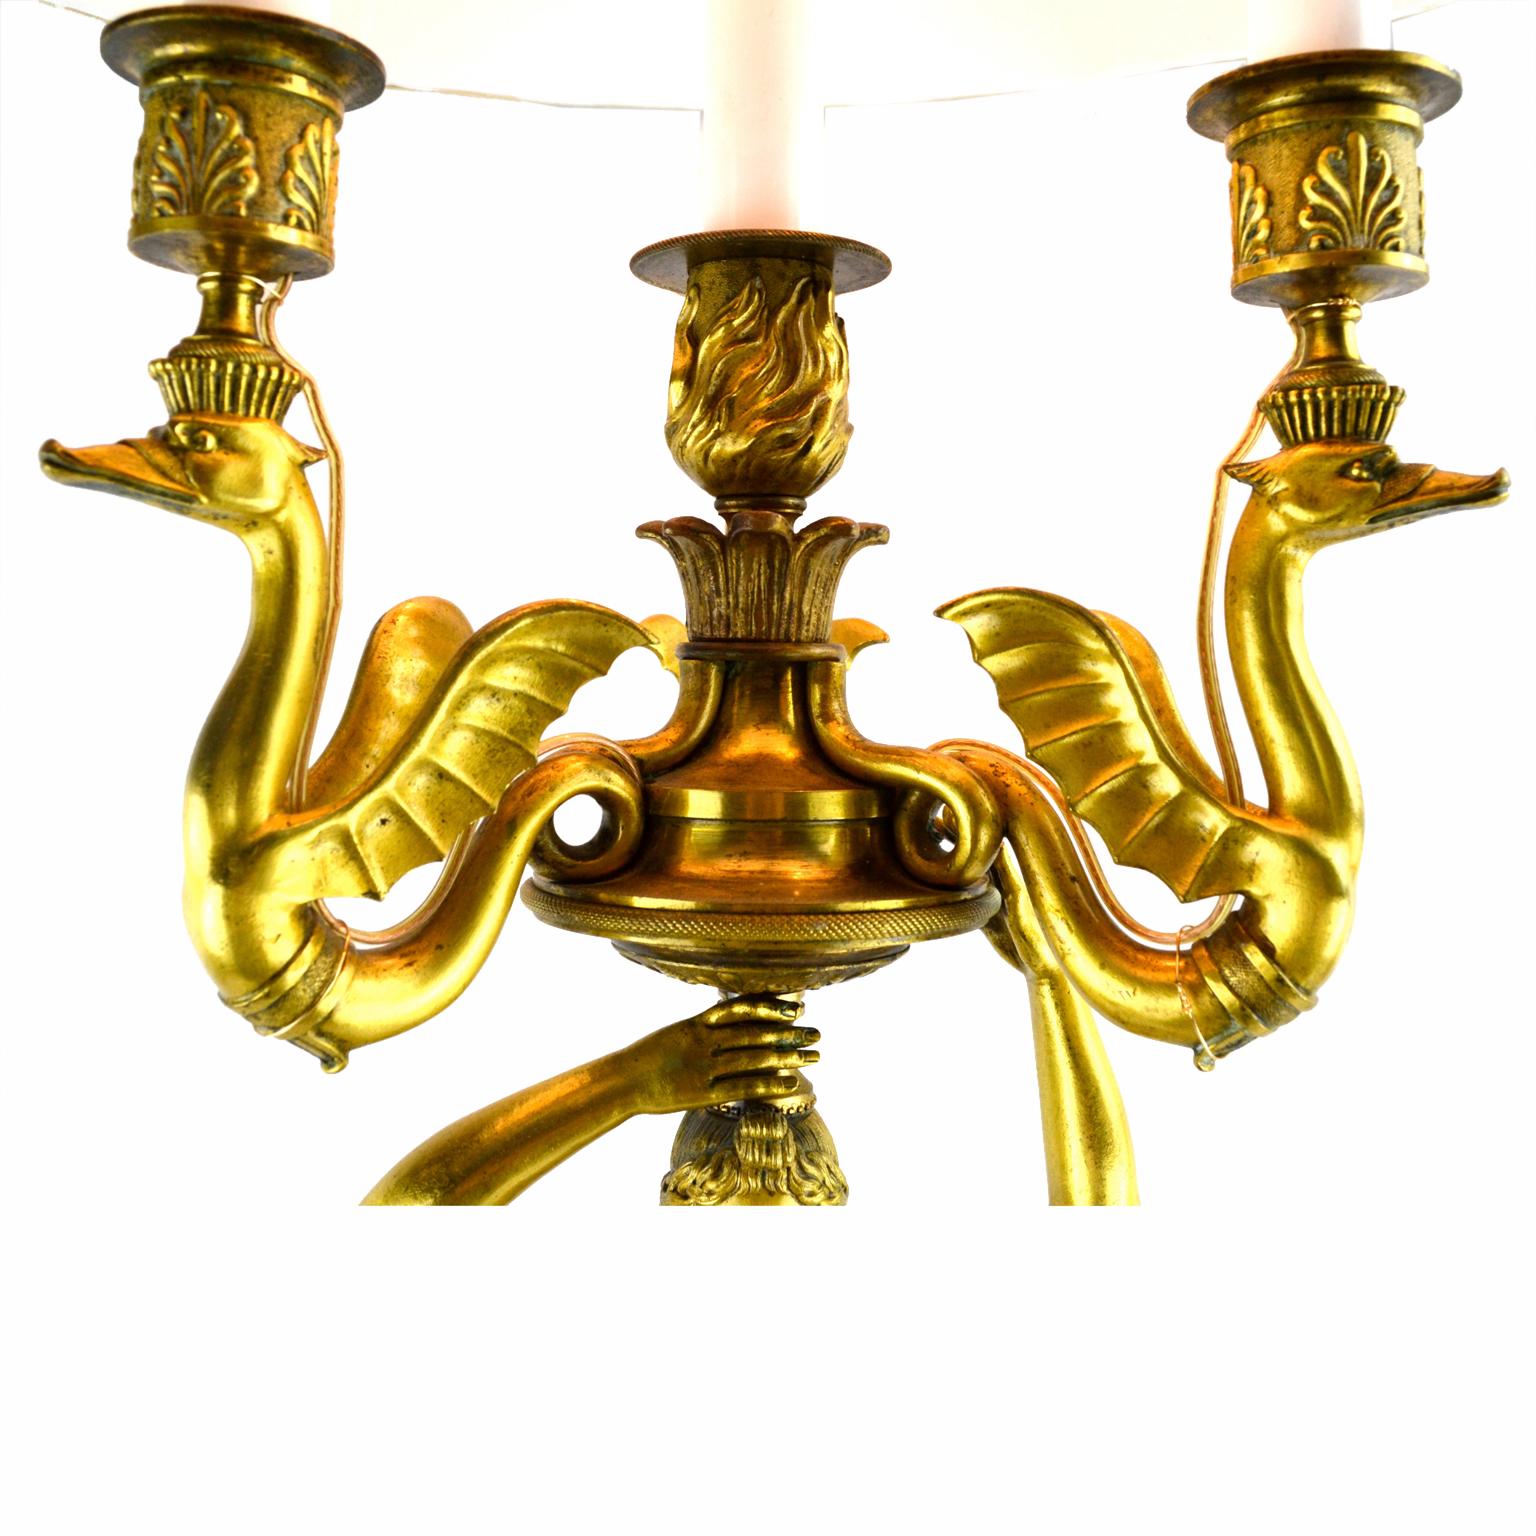 19th Century Russian Empire Gilt Bronze Figural Candelabra Lamp For Sale 2